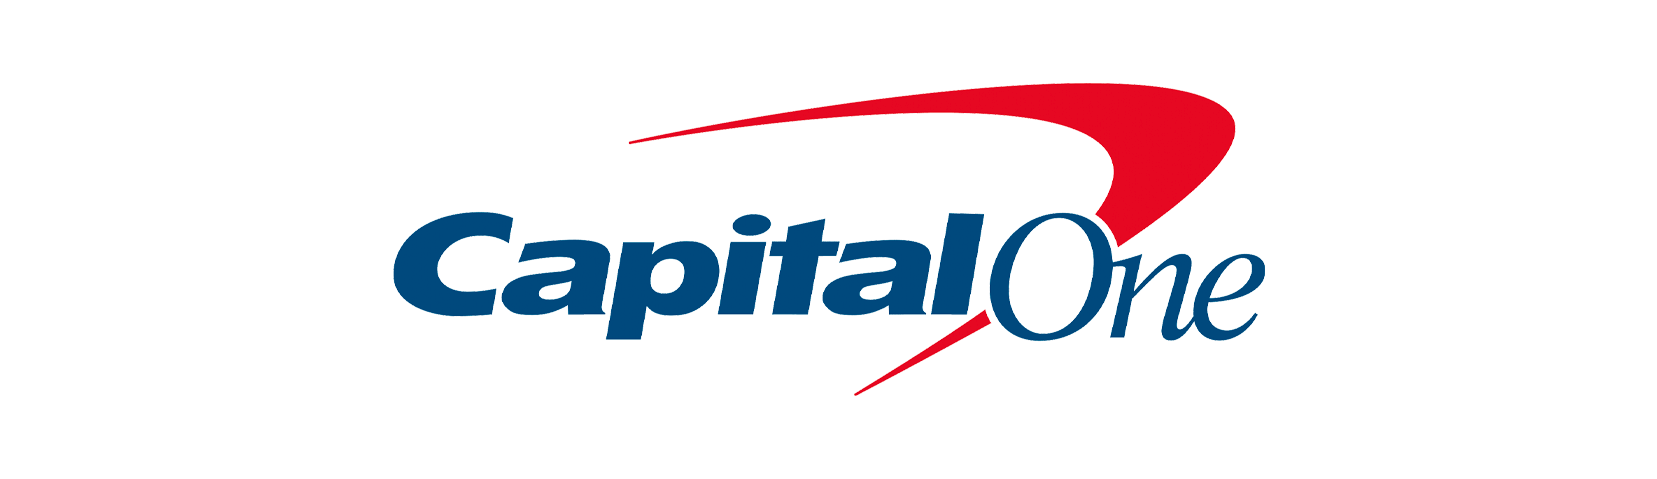 network_capital-one